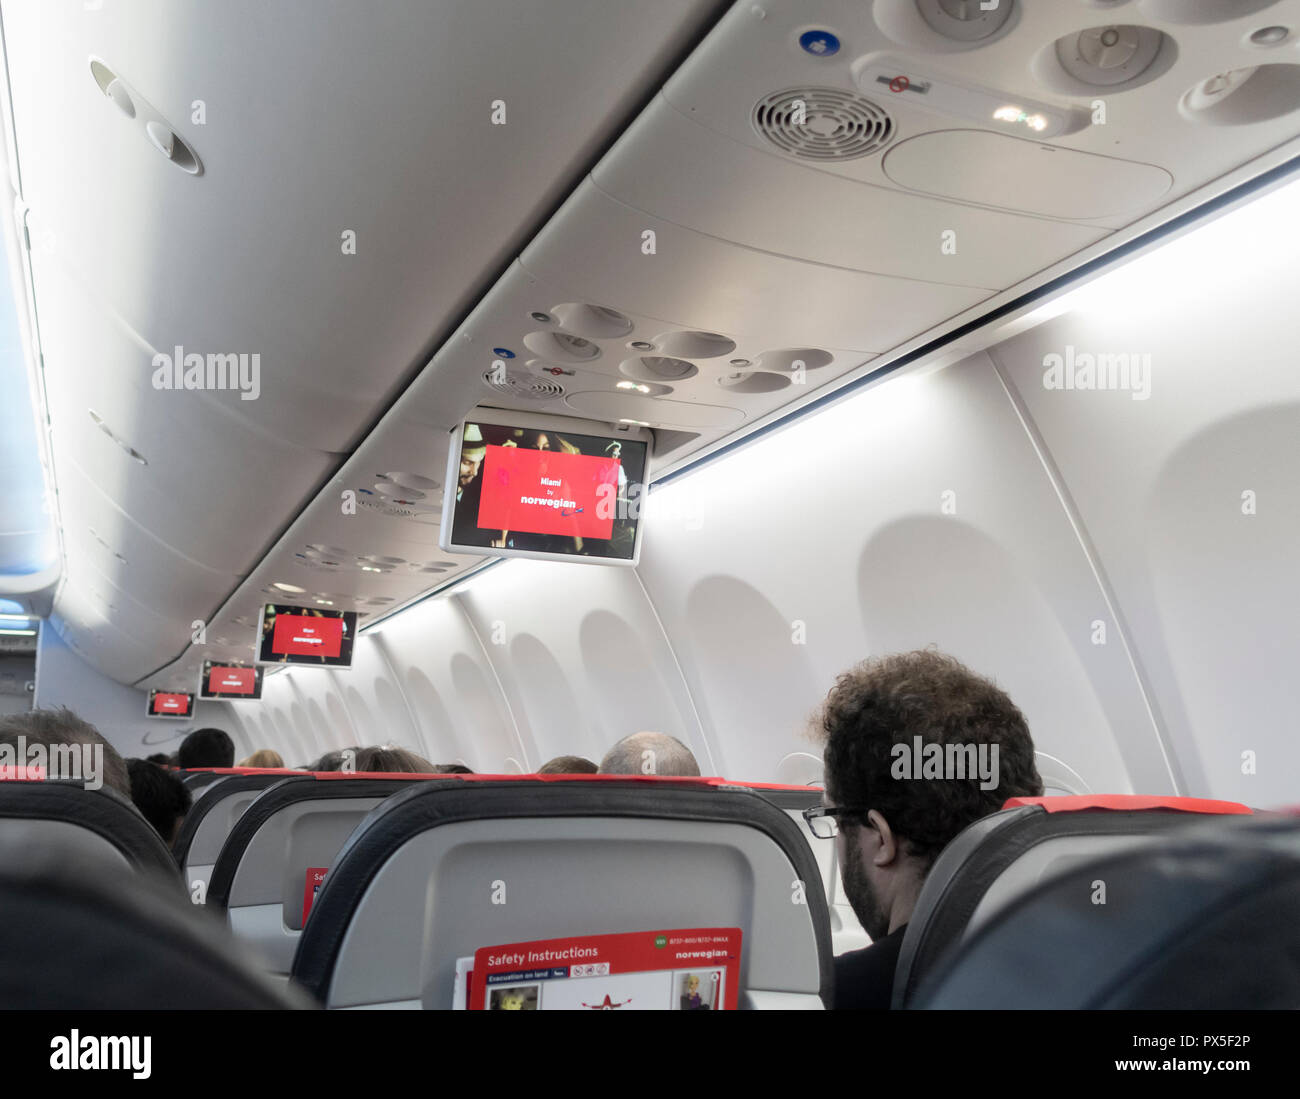 Drop down video screens on low cost Norwegian airlines flight. Stock Photo